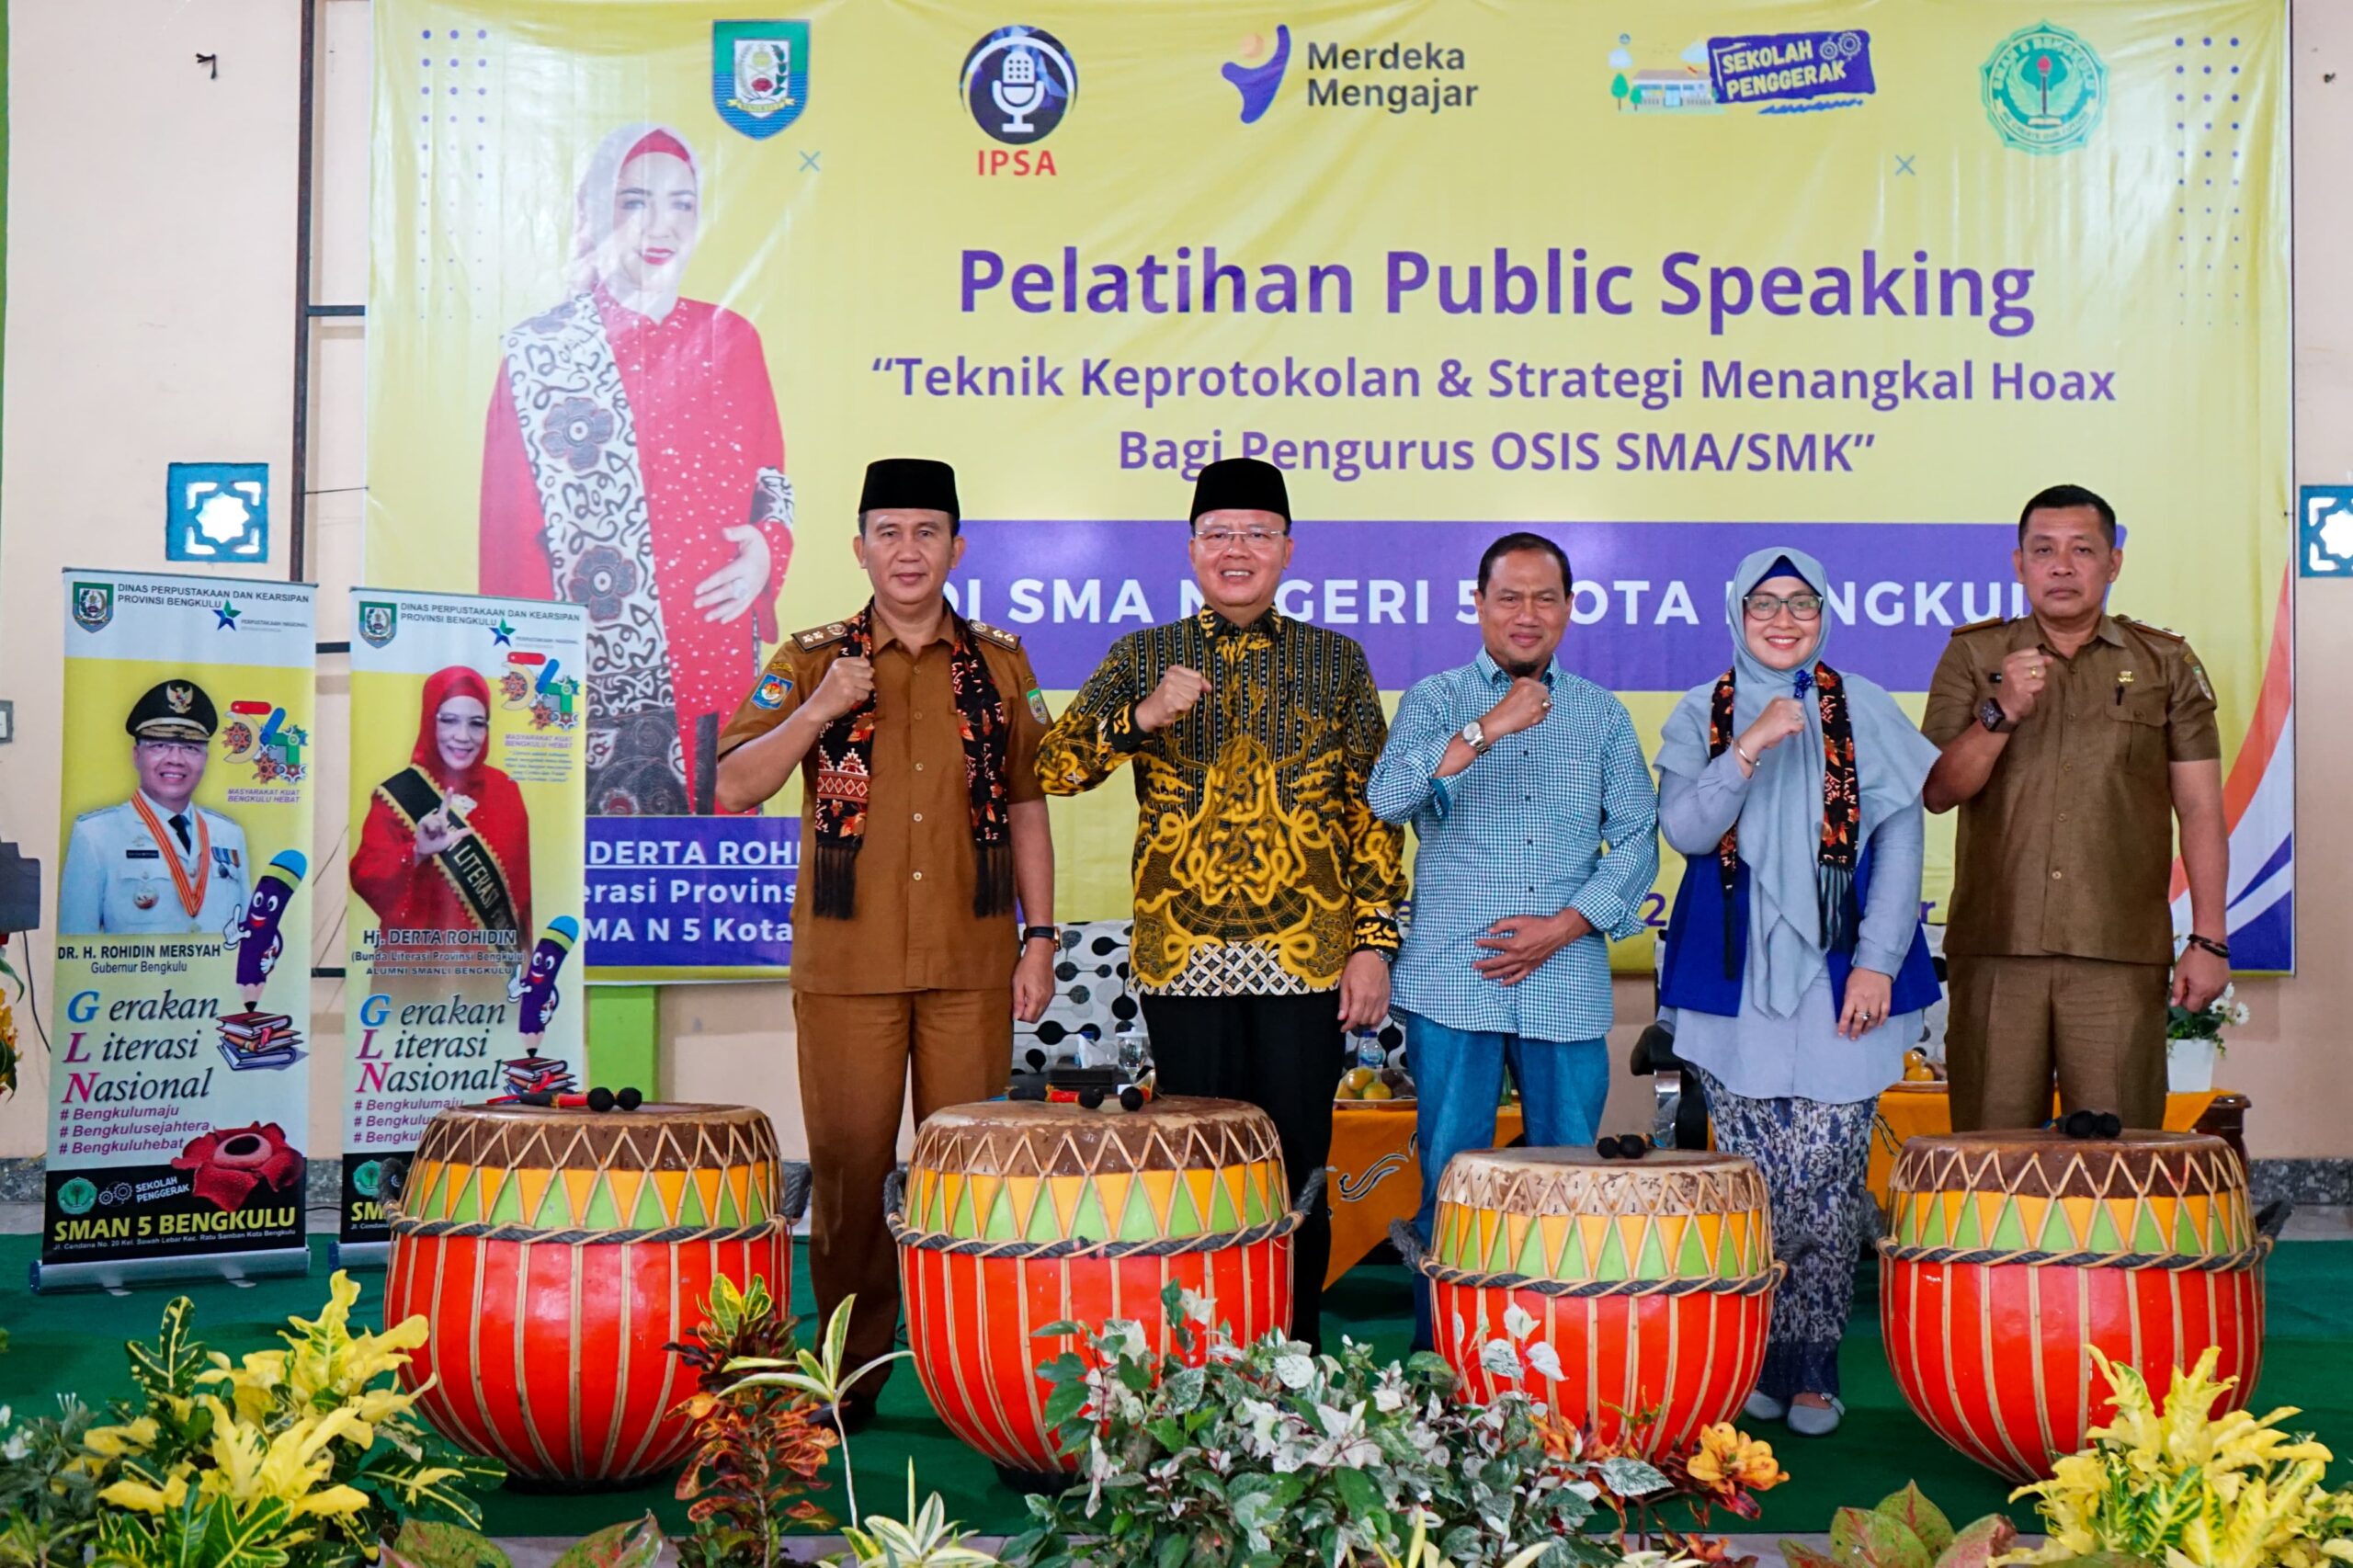 SMA N 5 Kota Bengkulu Menggelar Pelatihan Public Speaking dan Teknik Keprotokolan bagi Pengurus OSIS SMA/SMK Kota Bengkulu